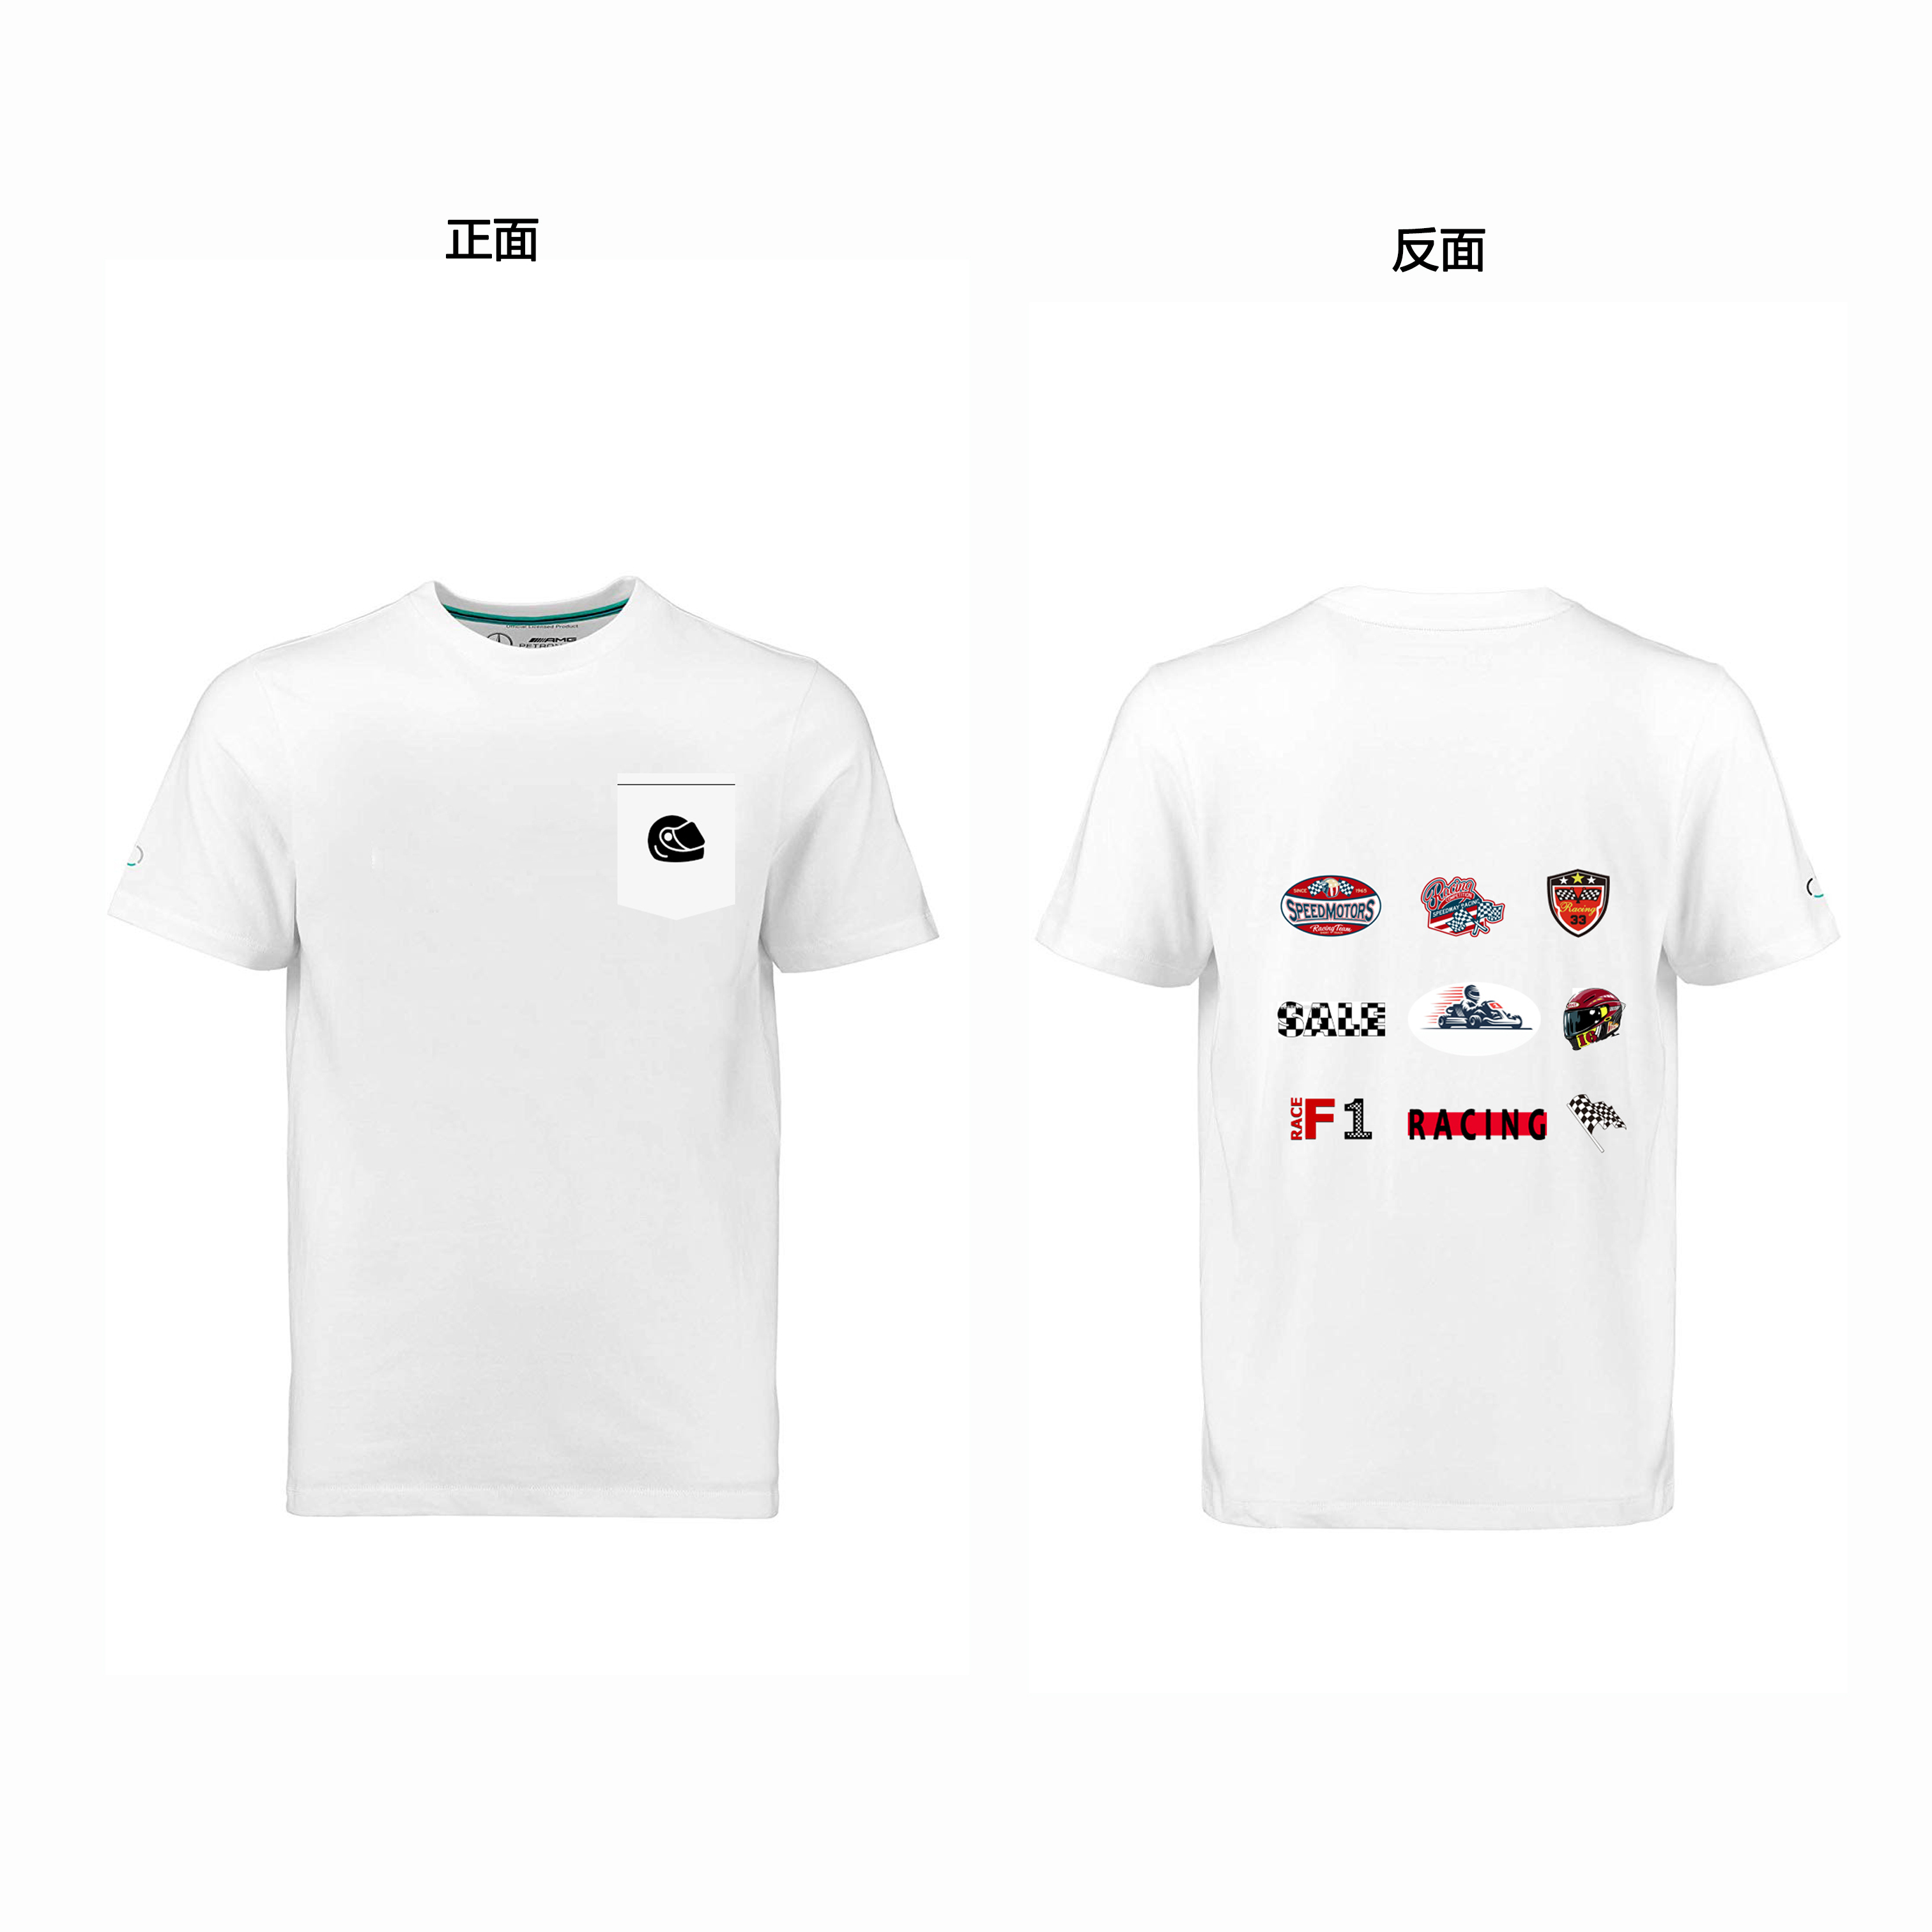 Promo Sports Tee Shirt with Logo Printing